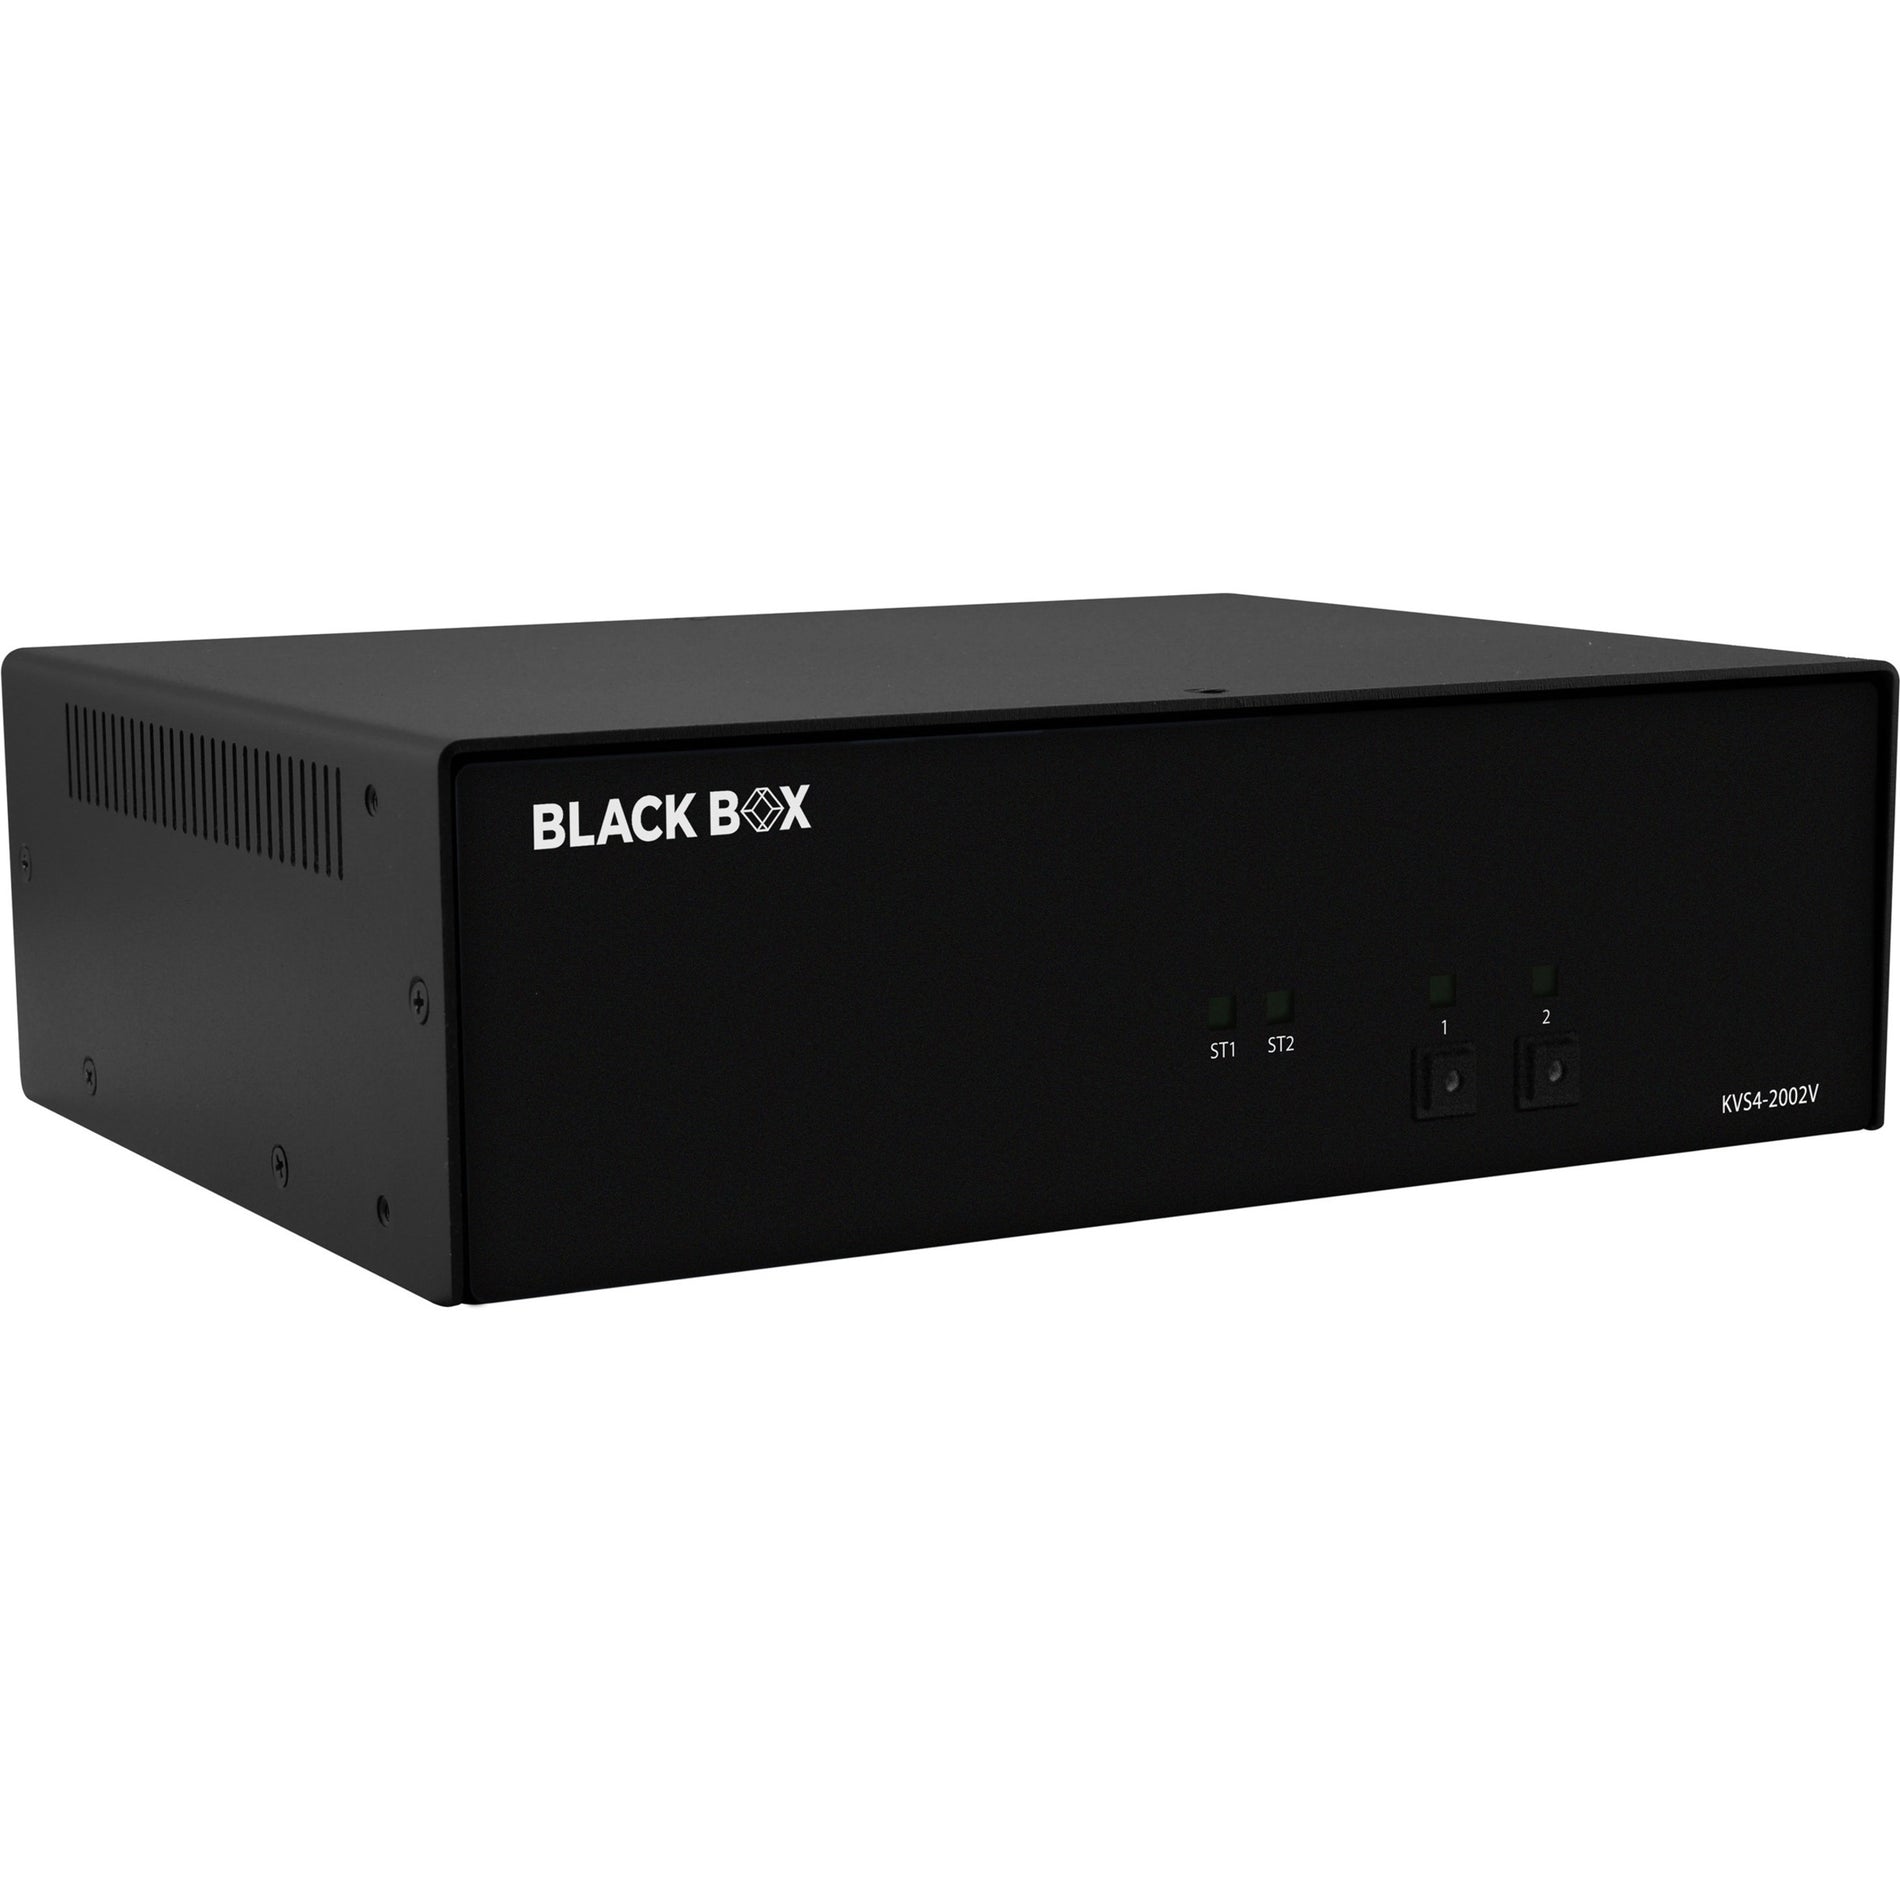 Black Box KVS4-2002V Switch KVM Sécurisé - DisplayPort 4 Ports USB 6 DisplayPorts Résolution 3840 x 2160 Garantie d'un An.